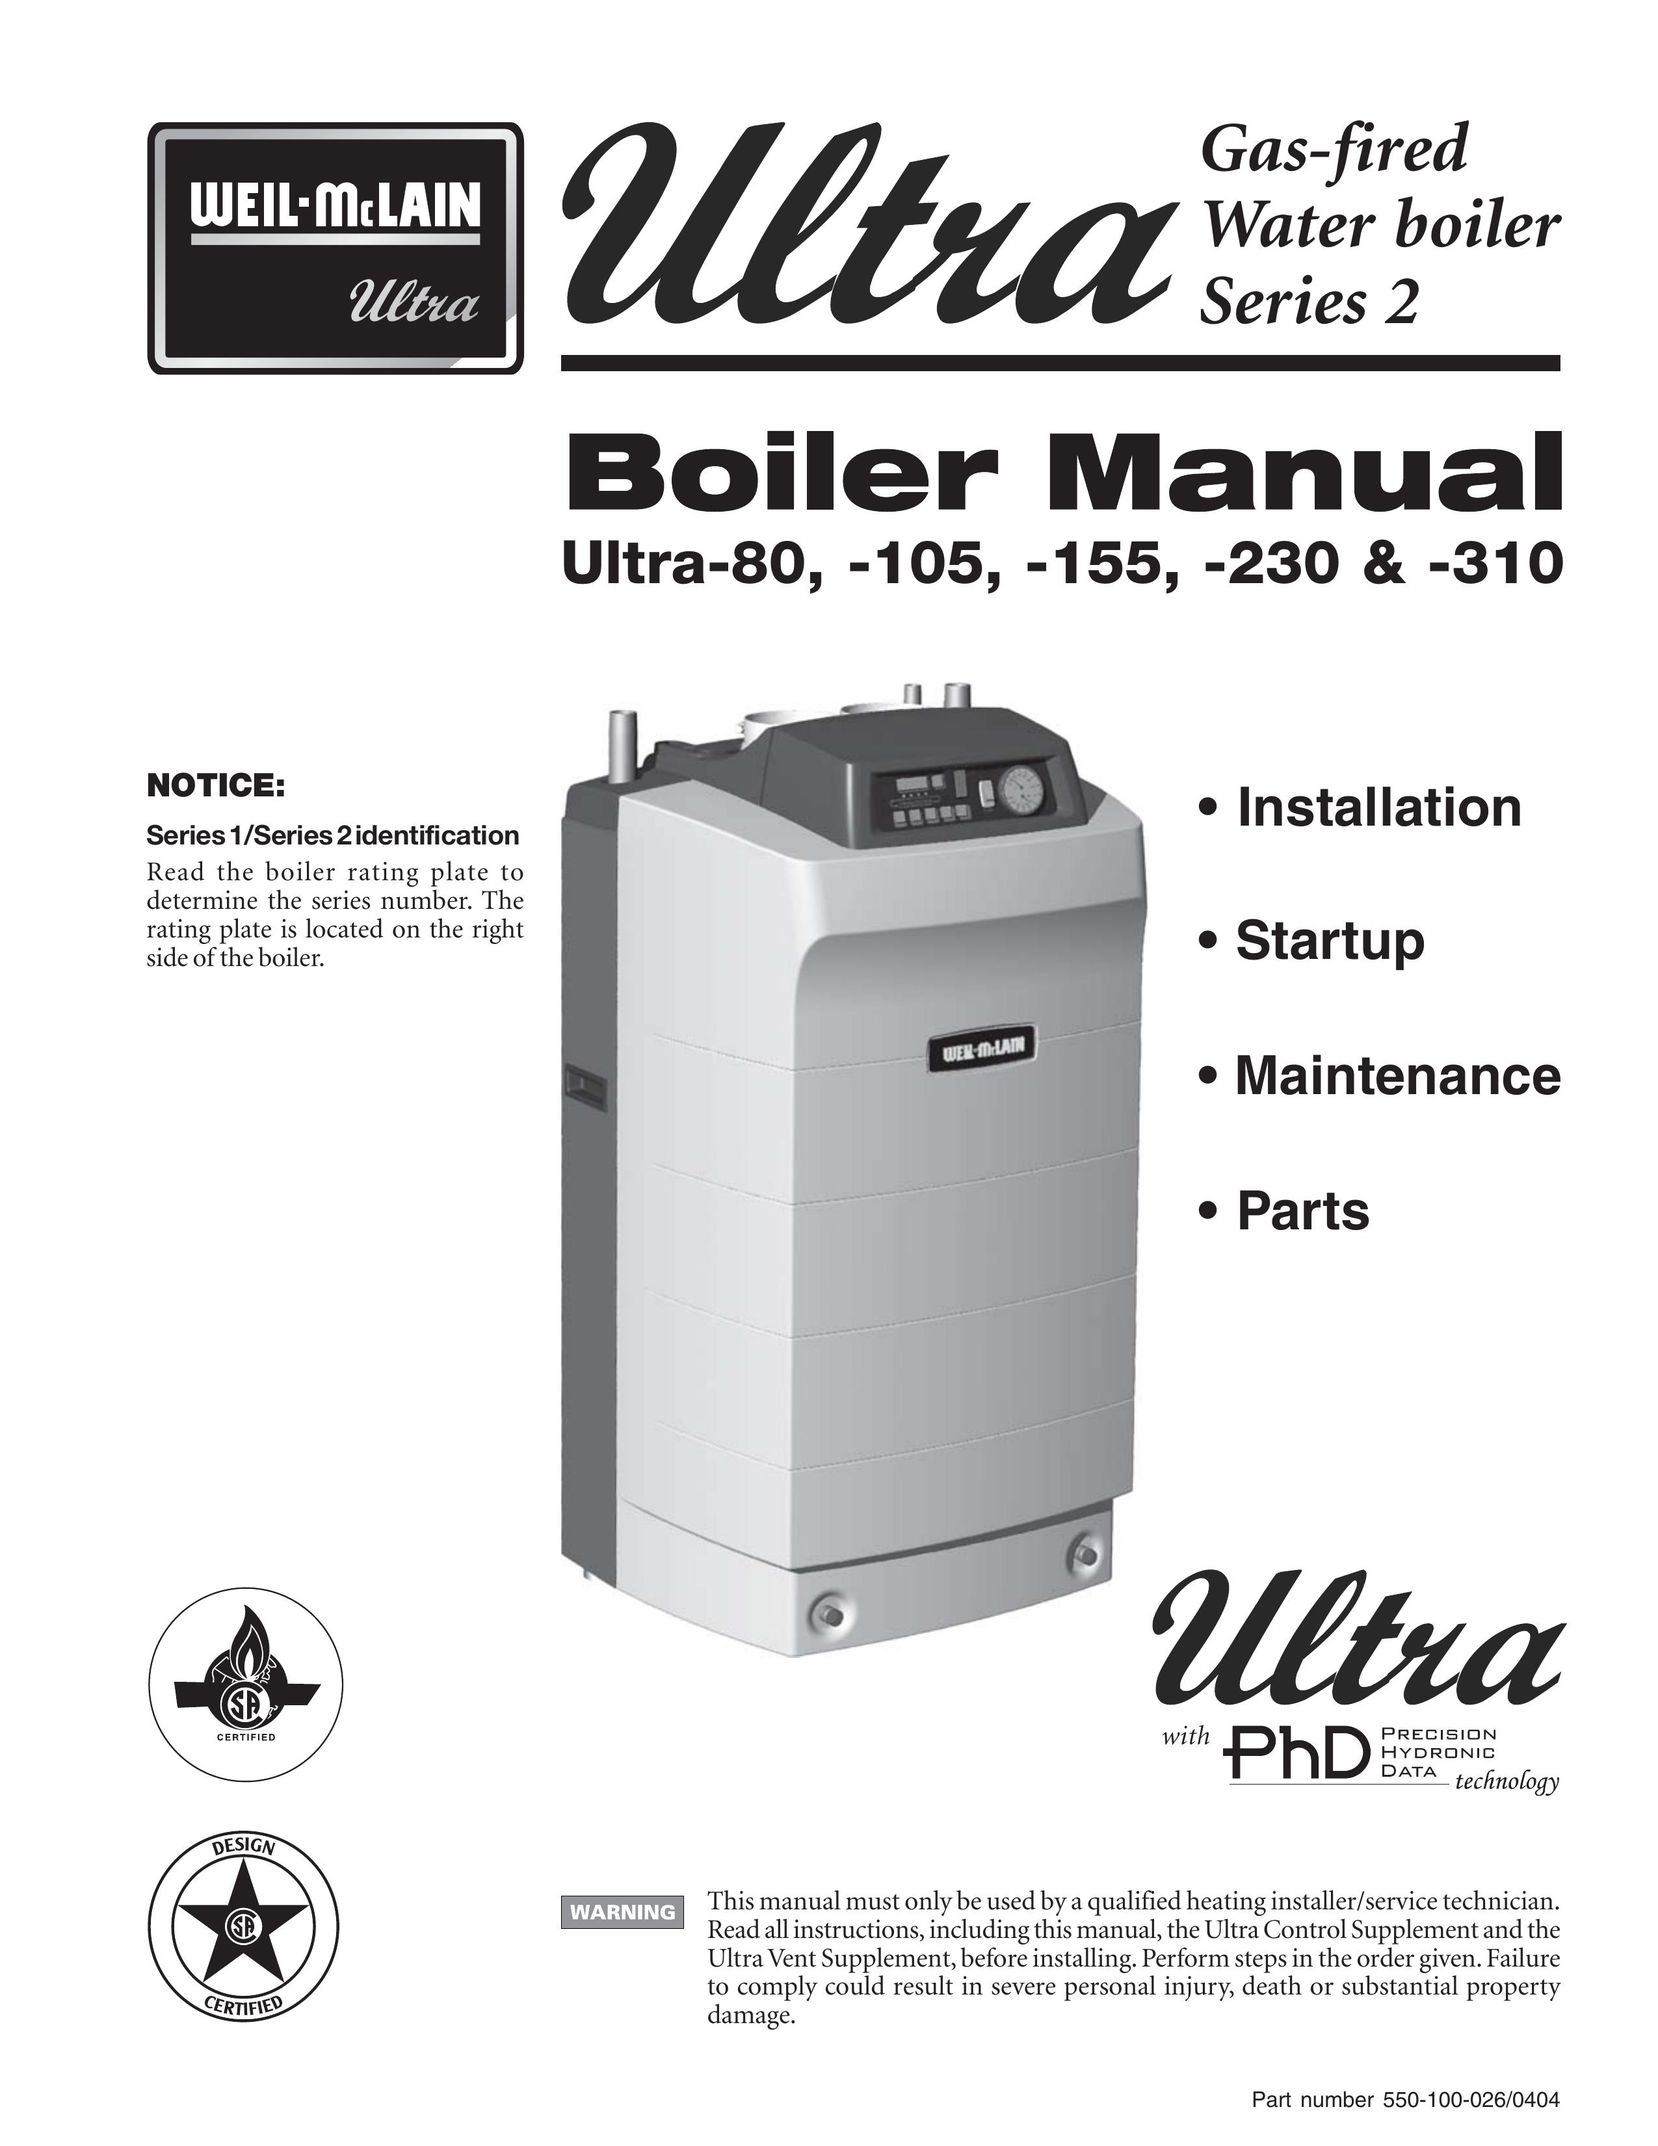 Ultra electronic -155 Boiler User Manual